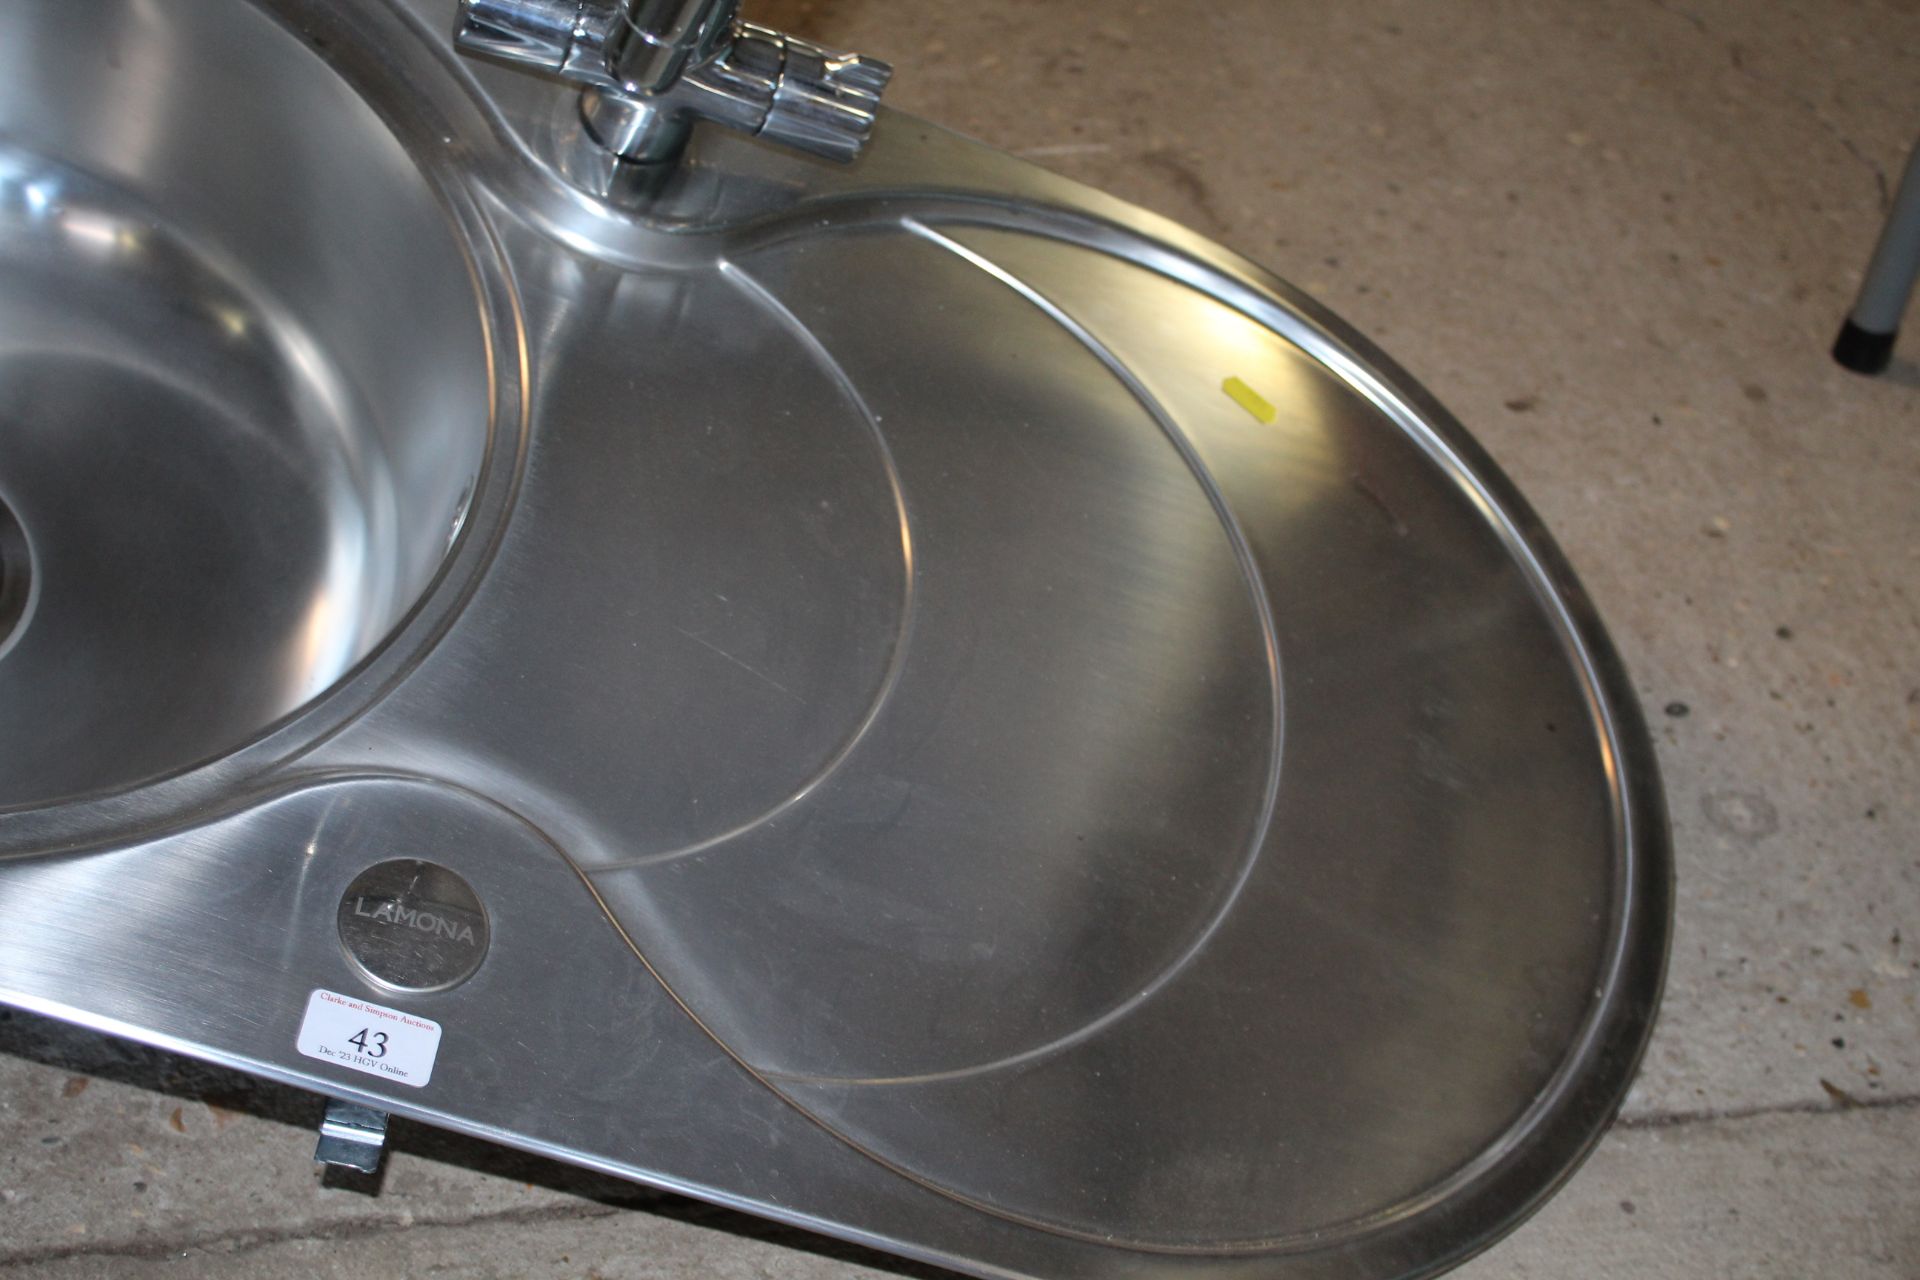 Lamona circular kitchen sink, draining board and mixer tap. V CAMPSEA ASHE - Image 3 of 3